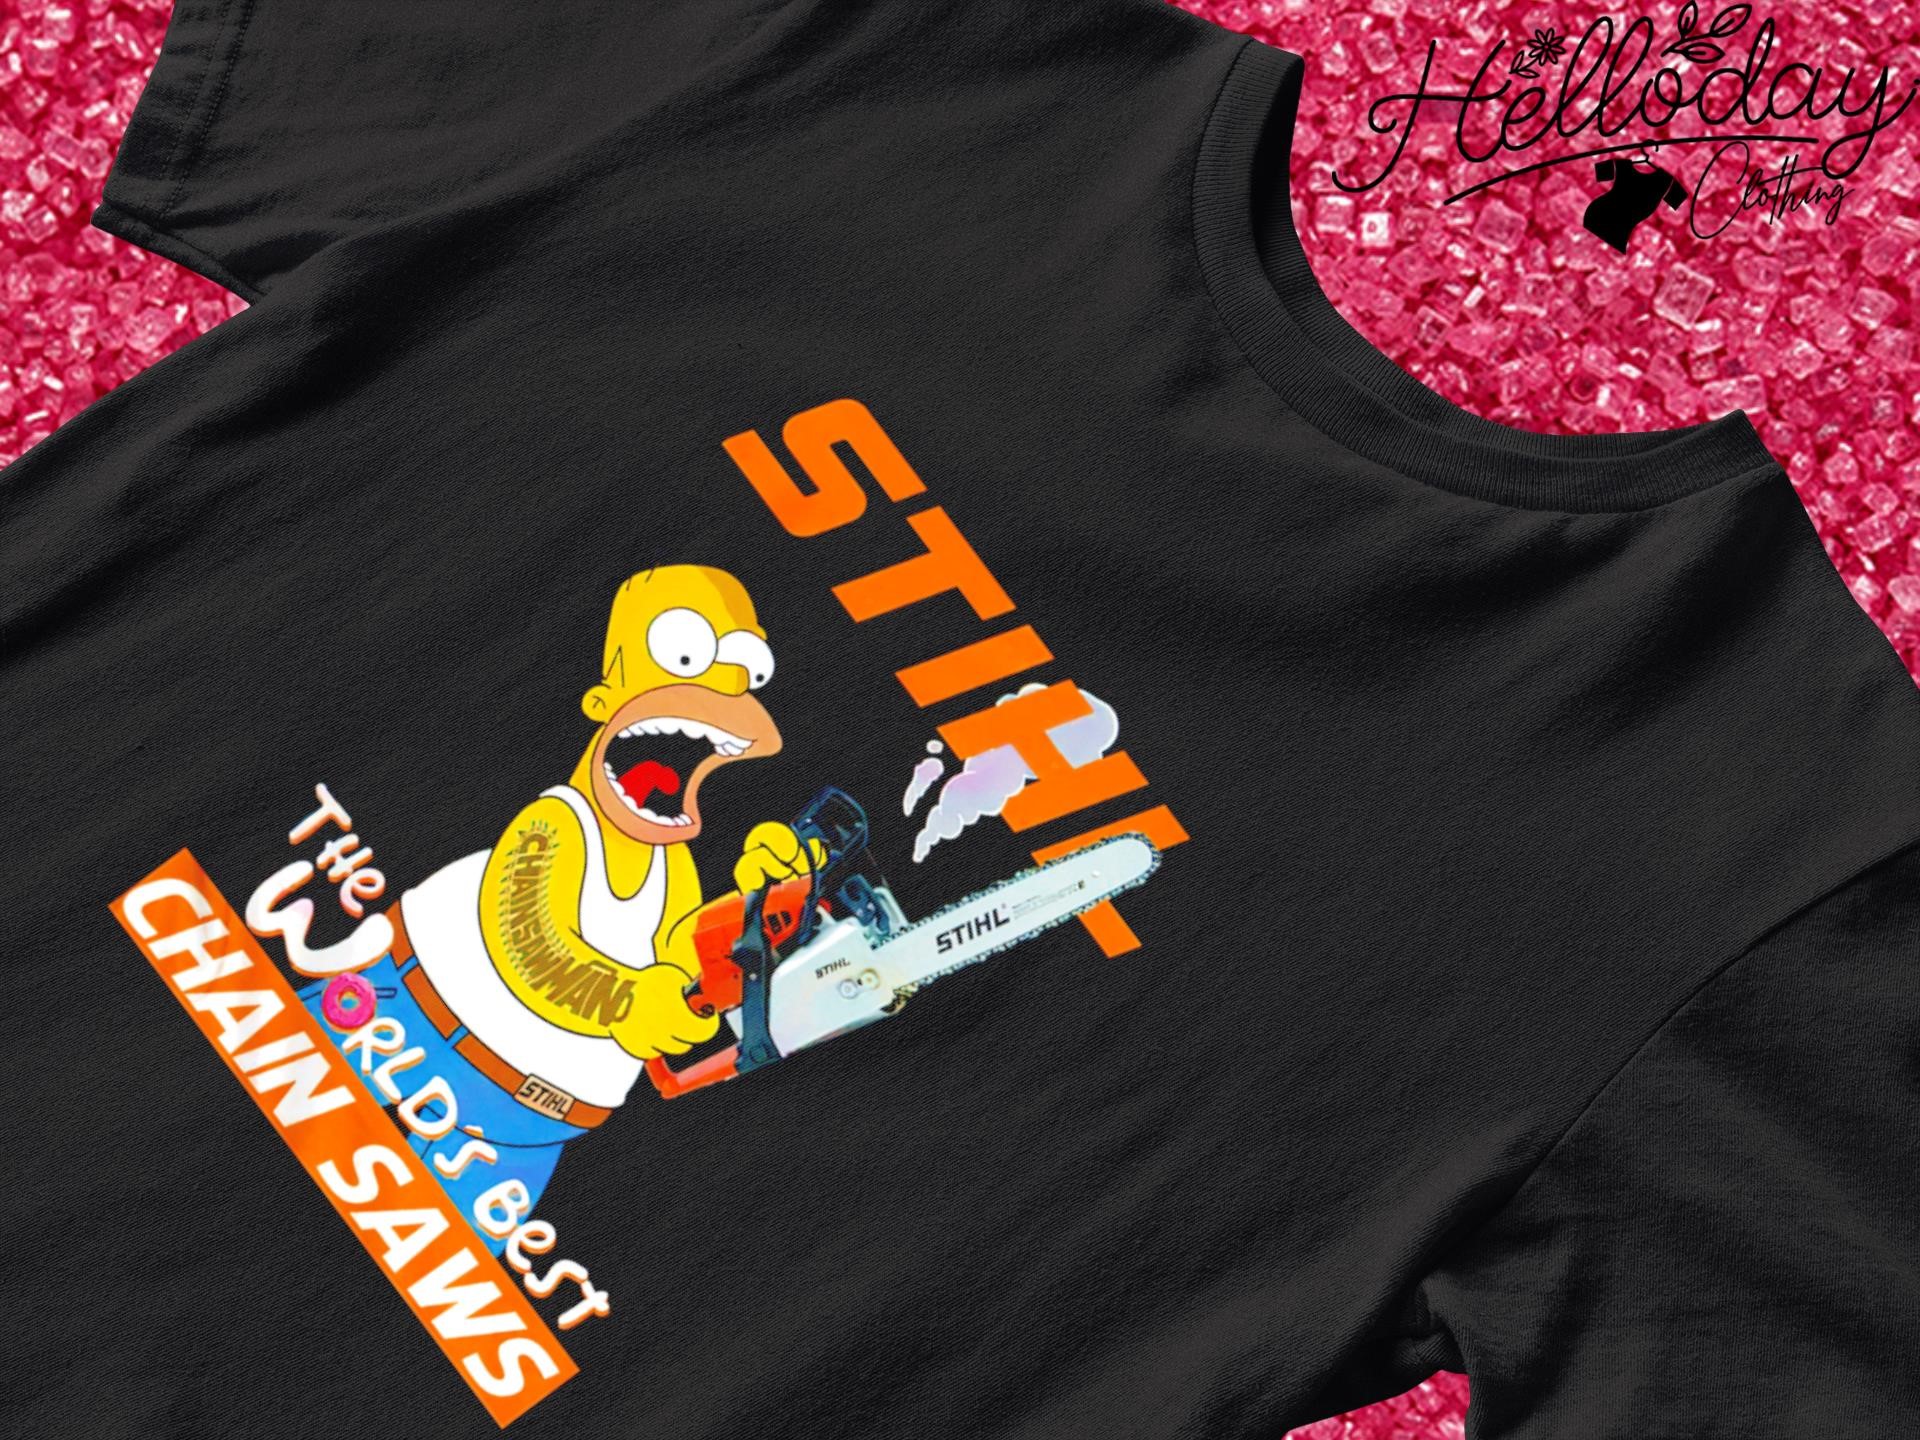 Stihl the World’s Best Chain saws shirt